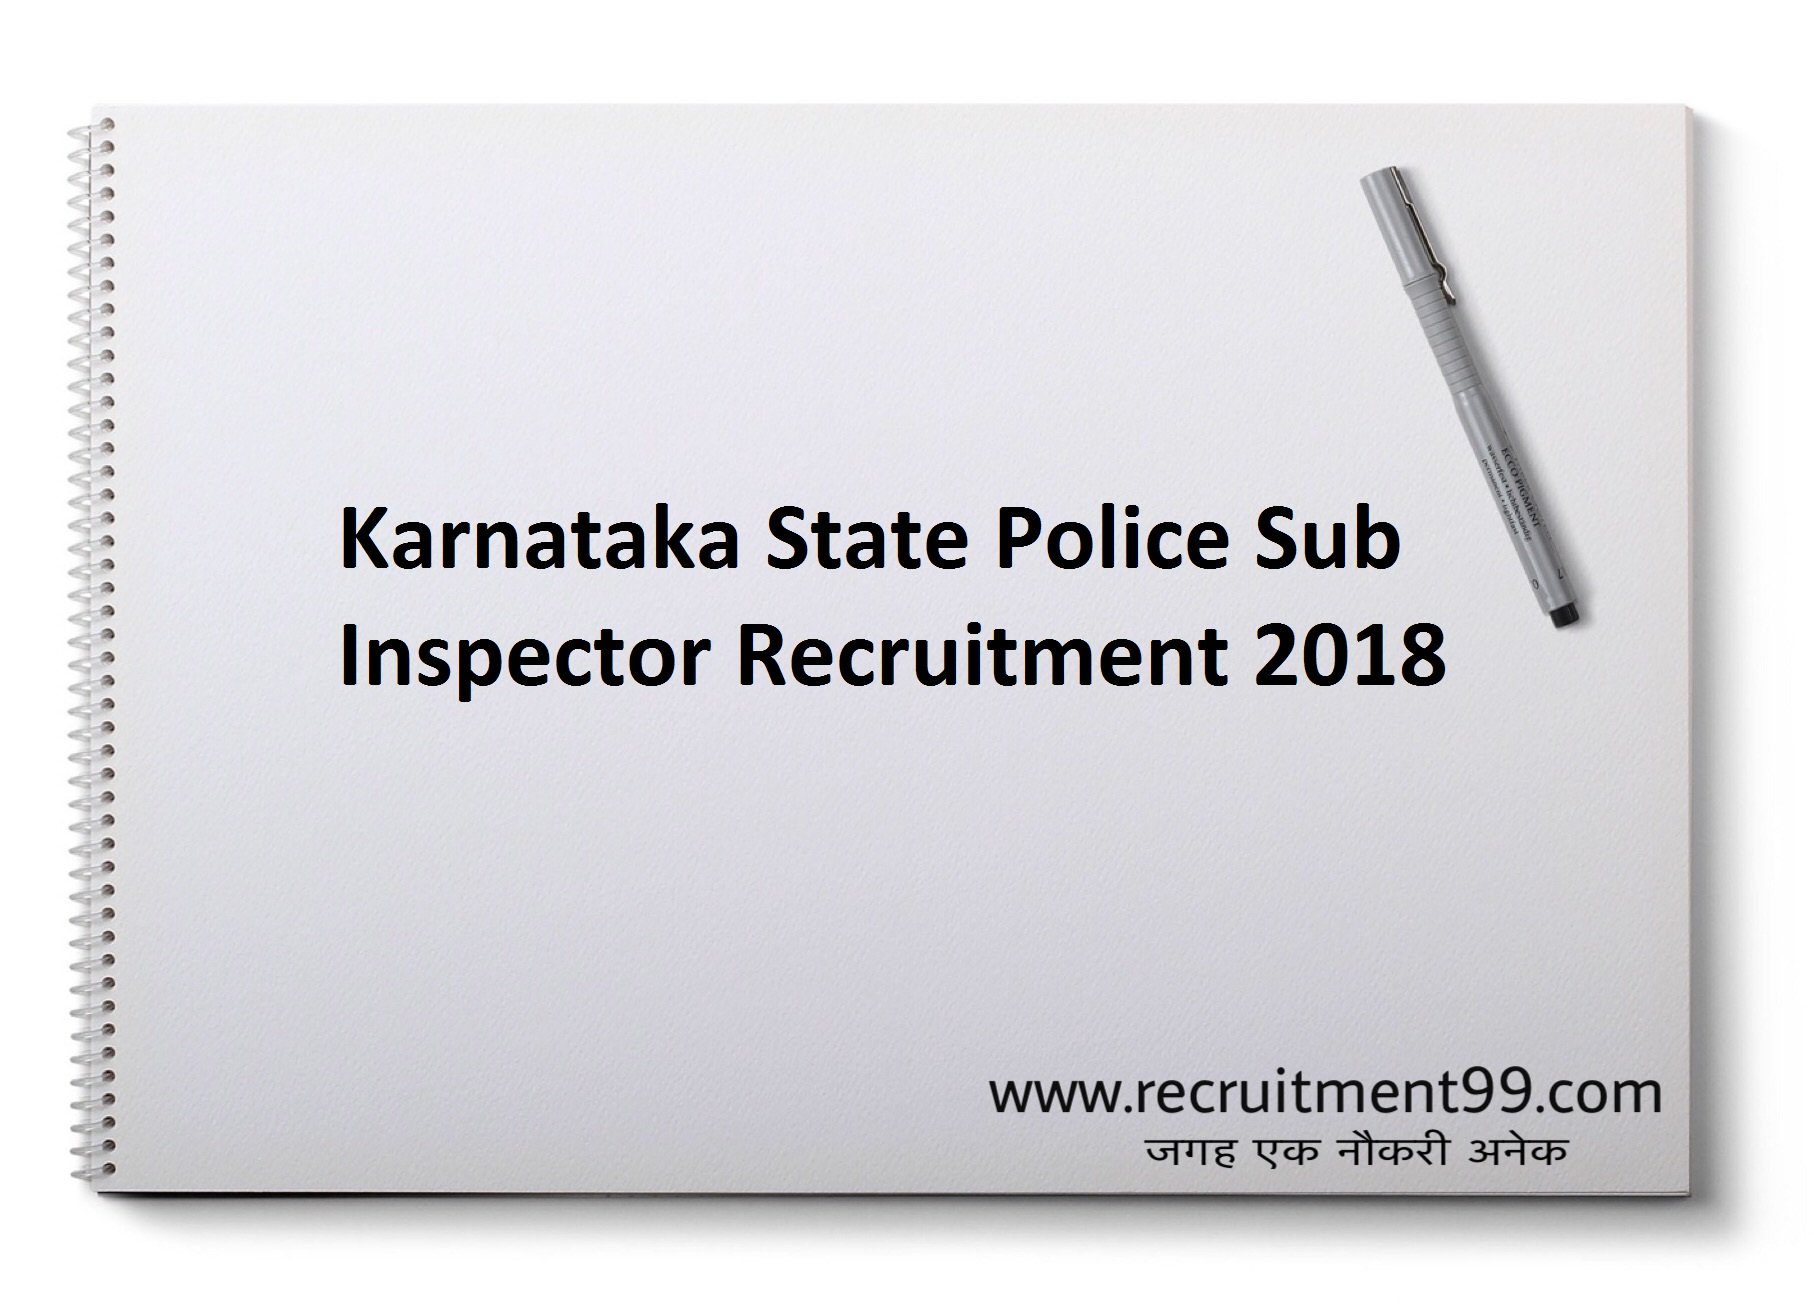 Karnataka State Police Sub Inspector Recruitment Hall Ticket Result 2018